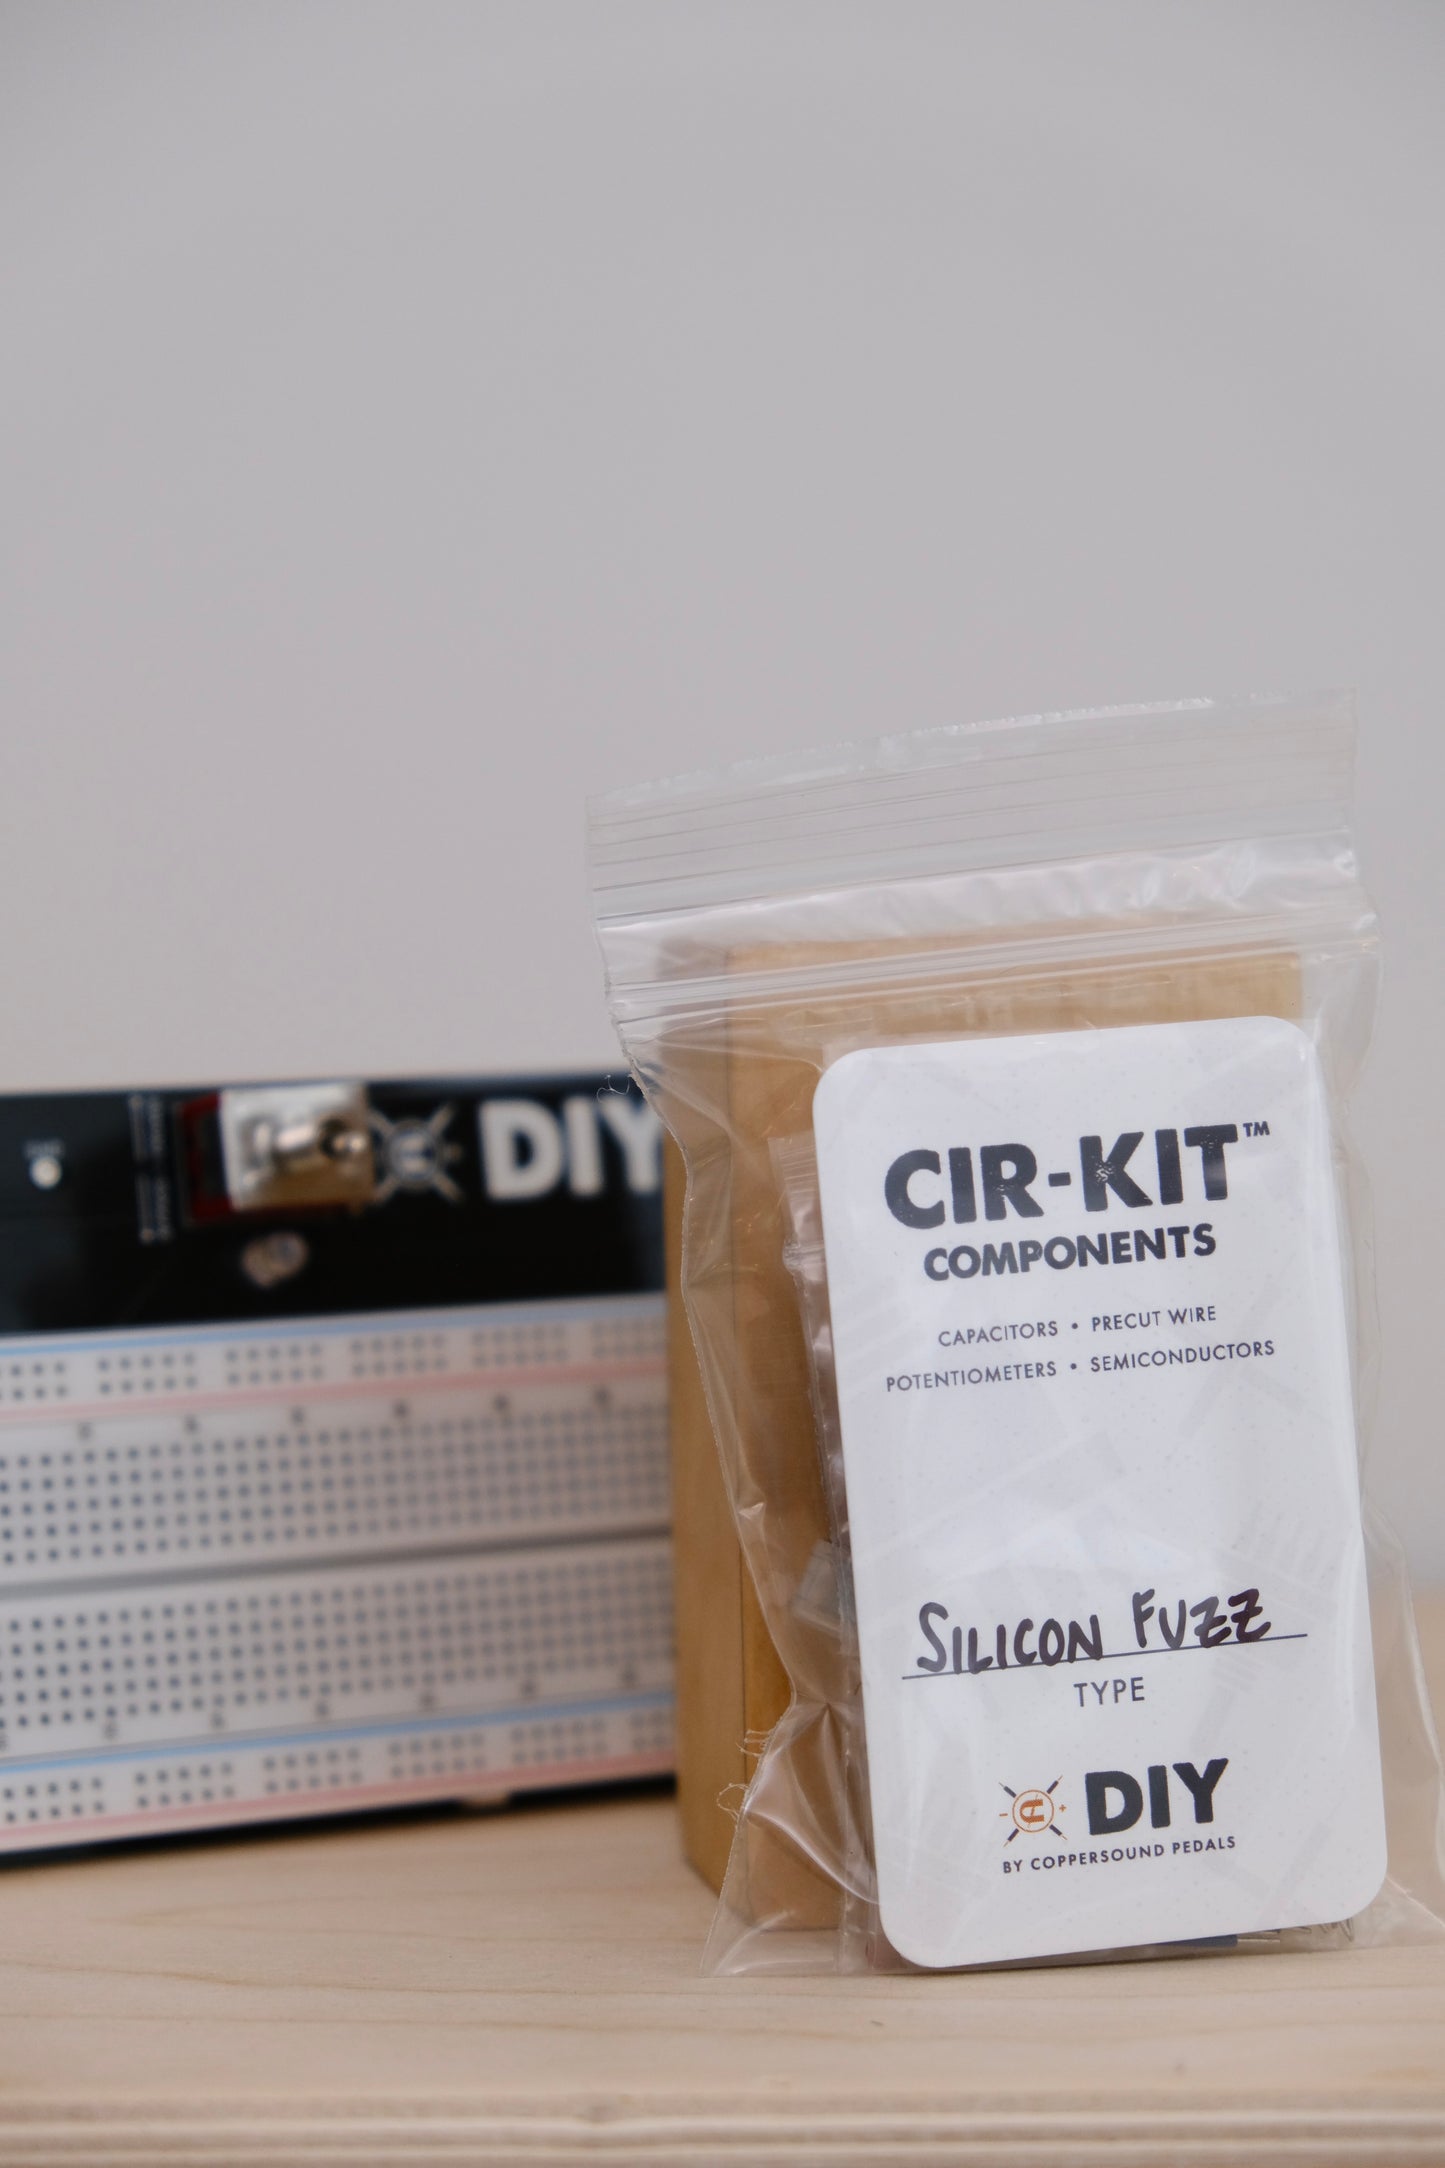 Coppersound DIY CIR-KIT Breadboard BUNDLE Silicon Fuzz